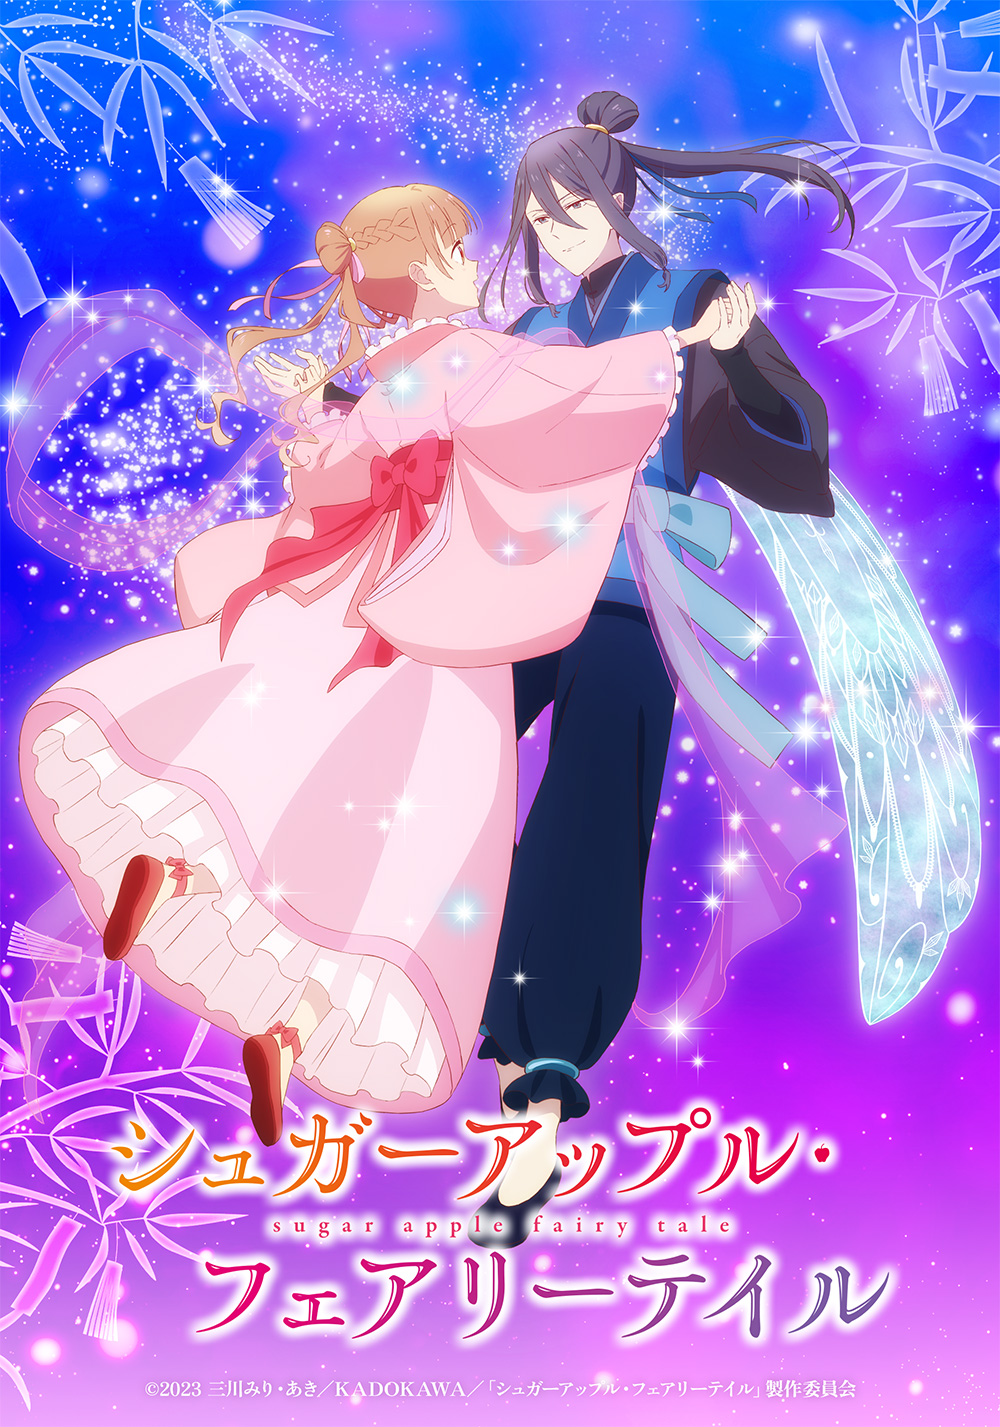 Sugar Apple Fairy Tale 2nd cour Tanabata Visual 